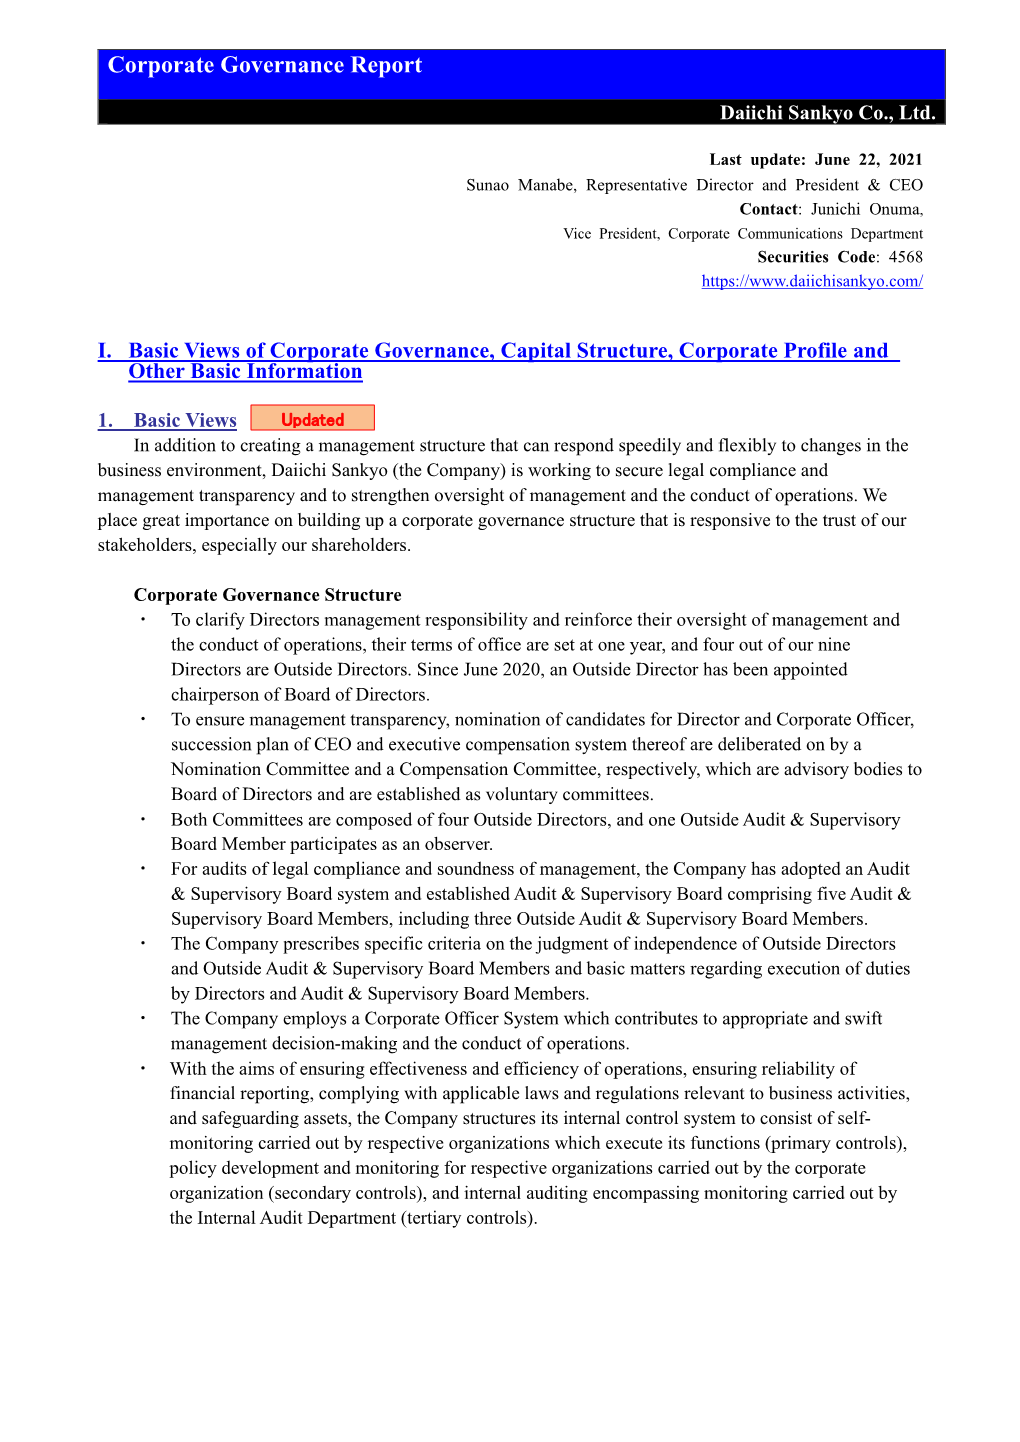 Corporate Governance Report